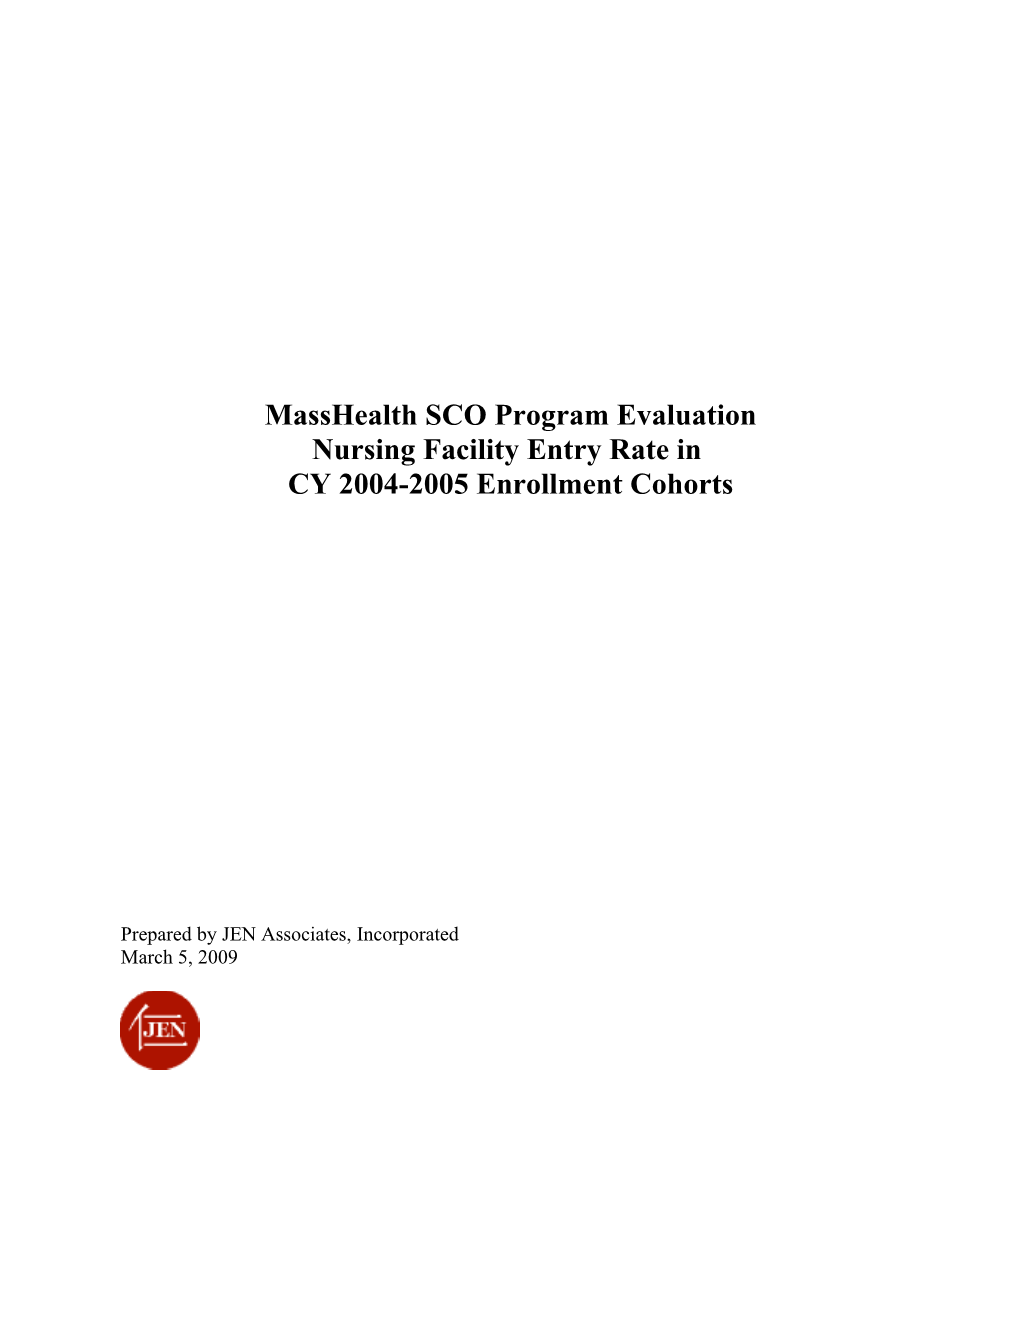 Masshealth SCO Program Evaluation